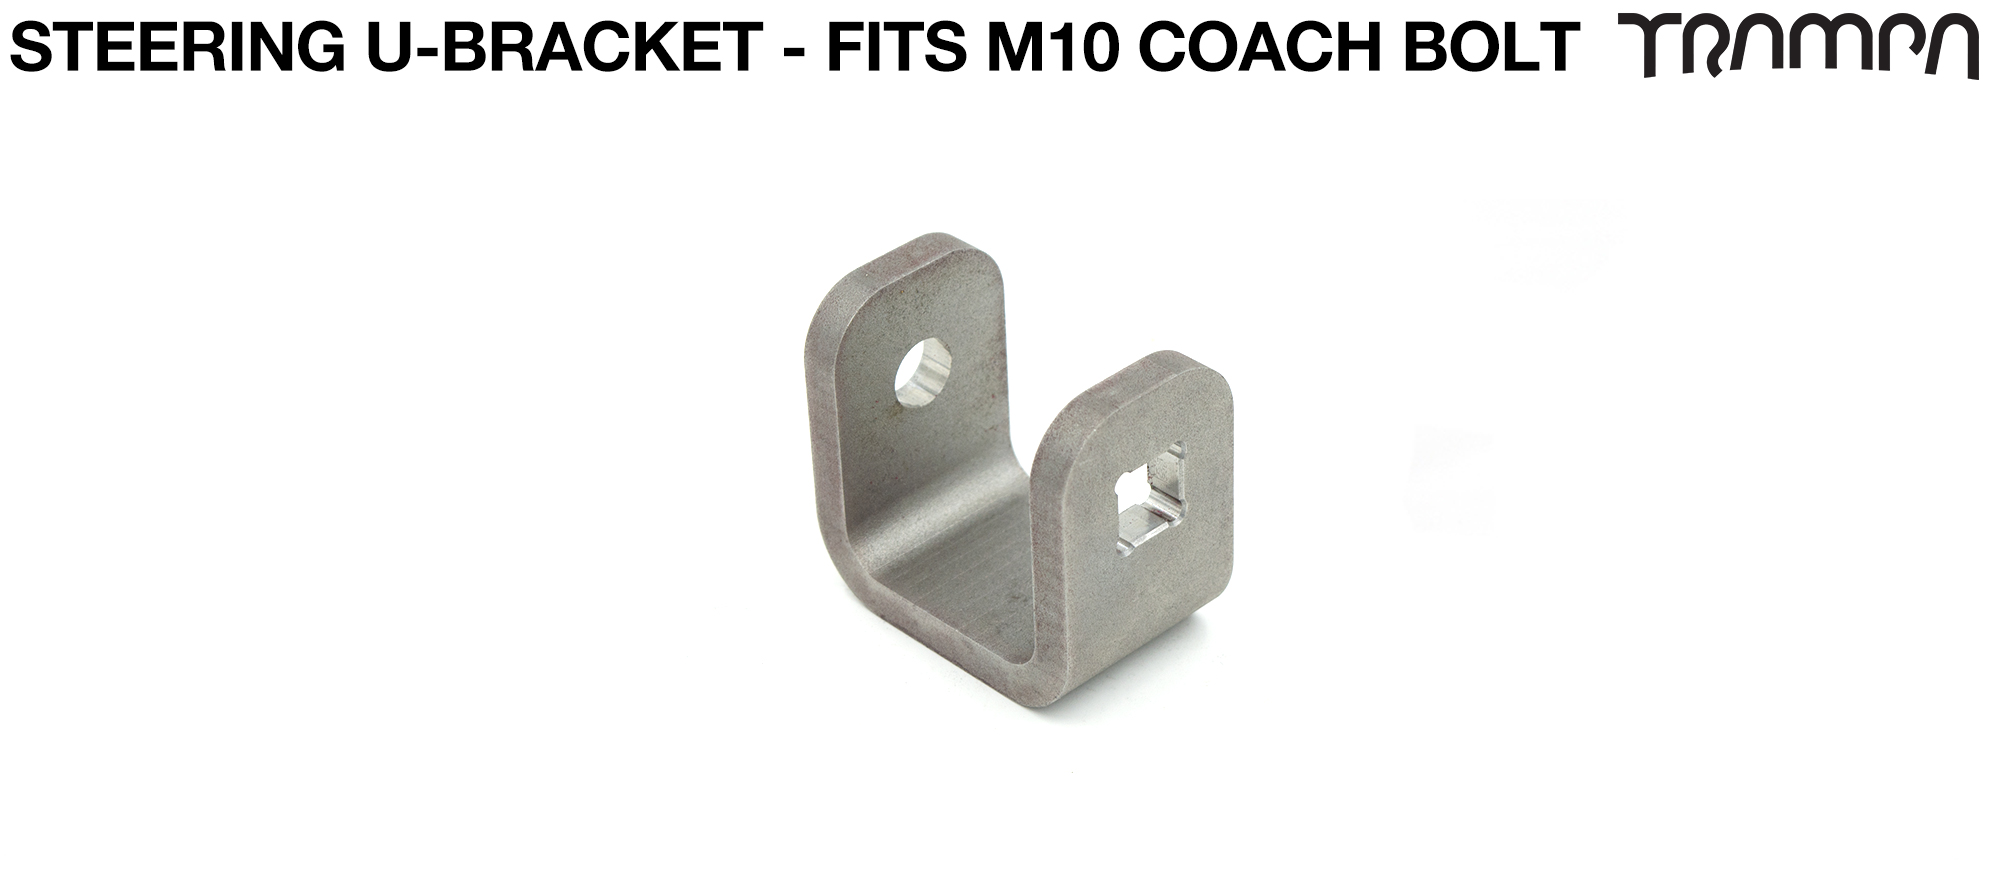 Steering U- Bracket fits M10 Coach Bolt - Mild Steel